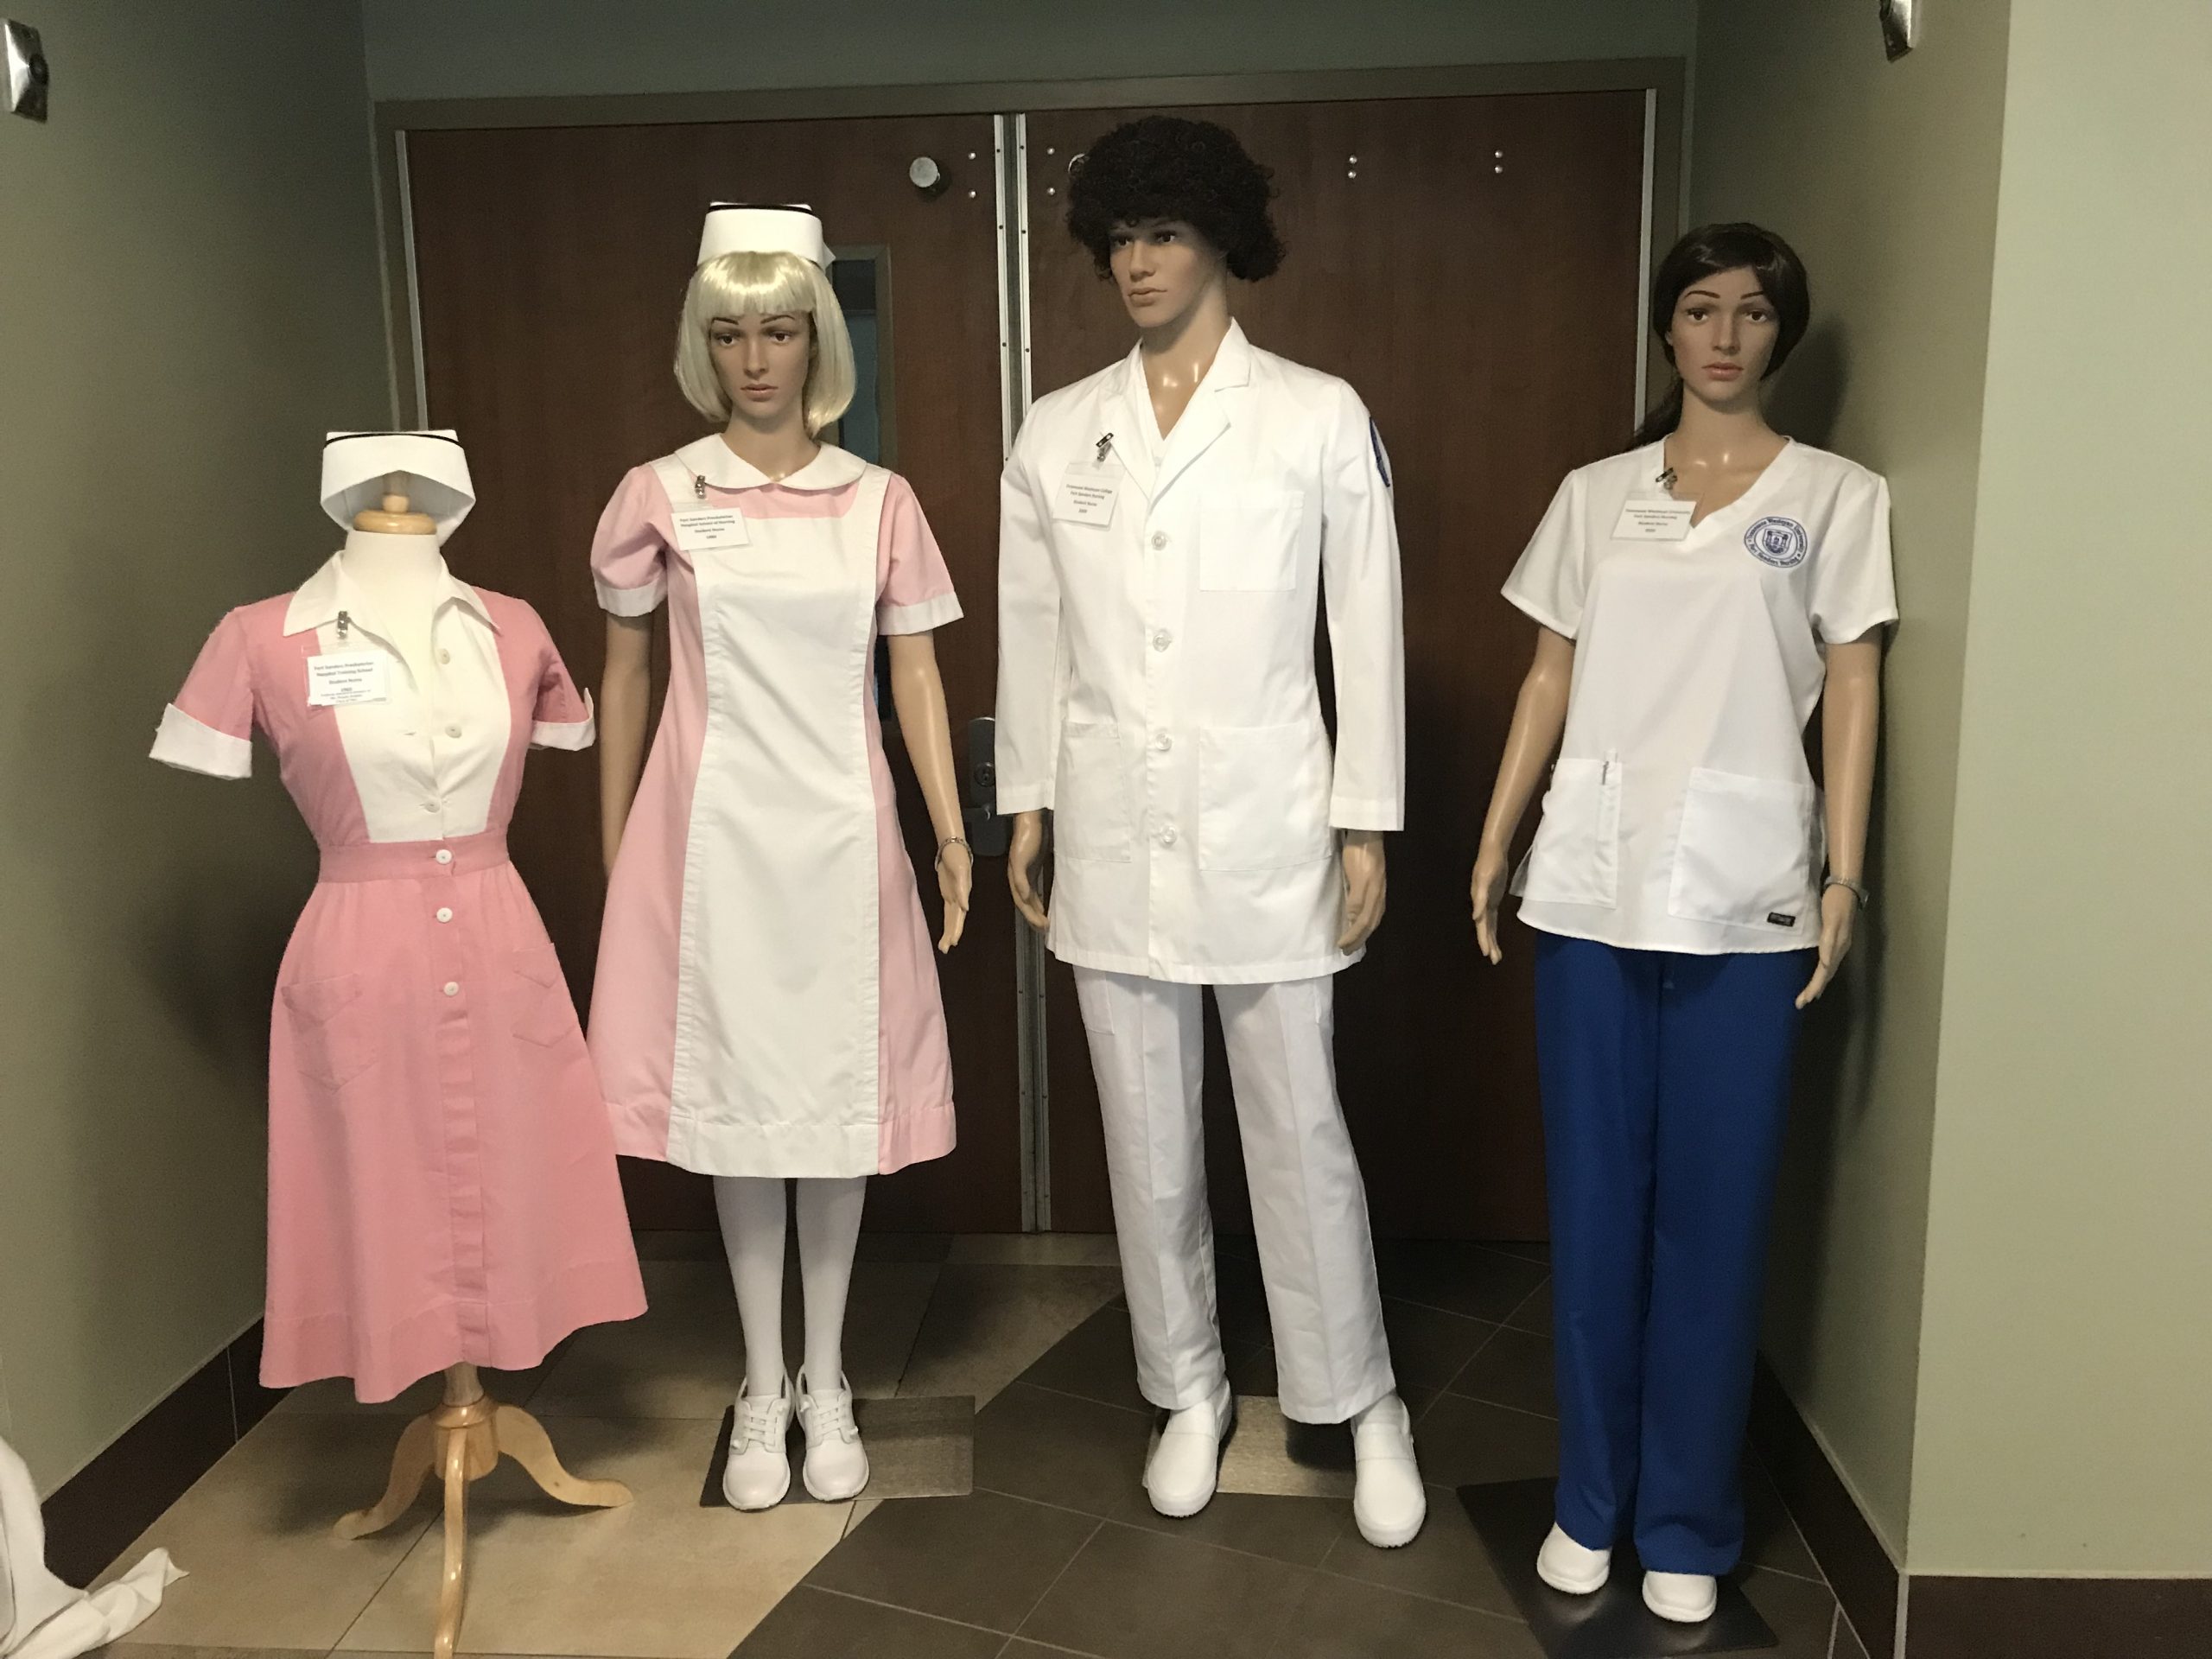 Four nursing uniforms assembled for Fort Sanders Regional's 100th Anniversary Celebration